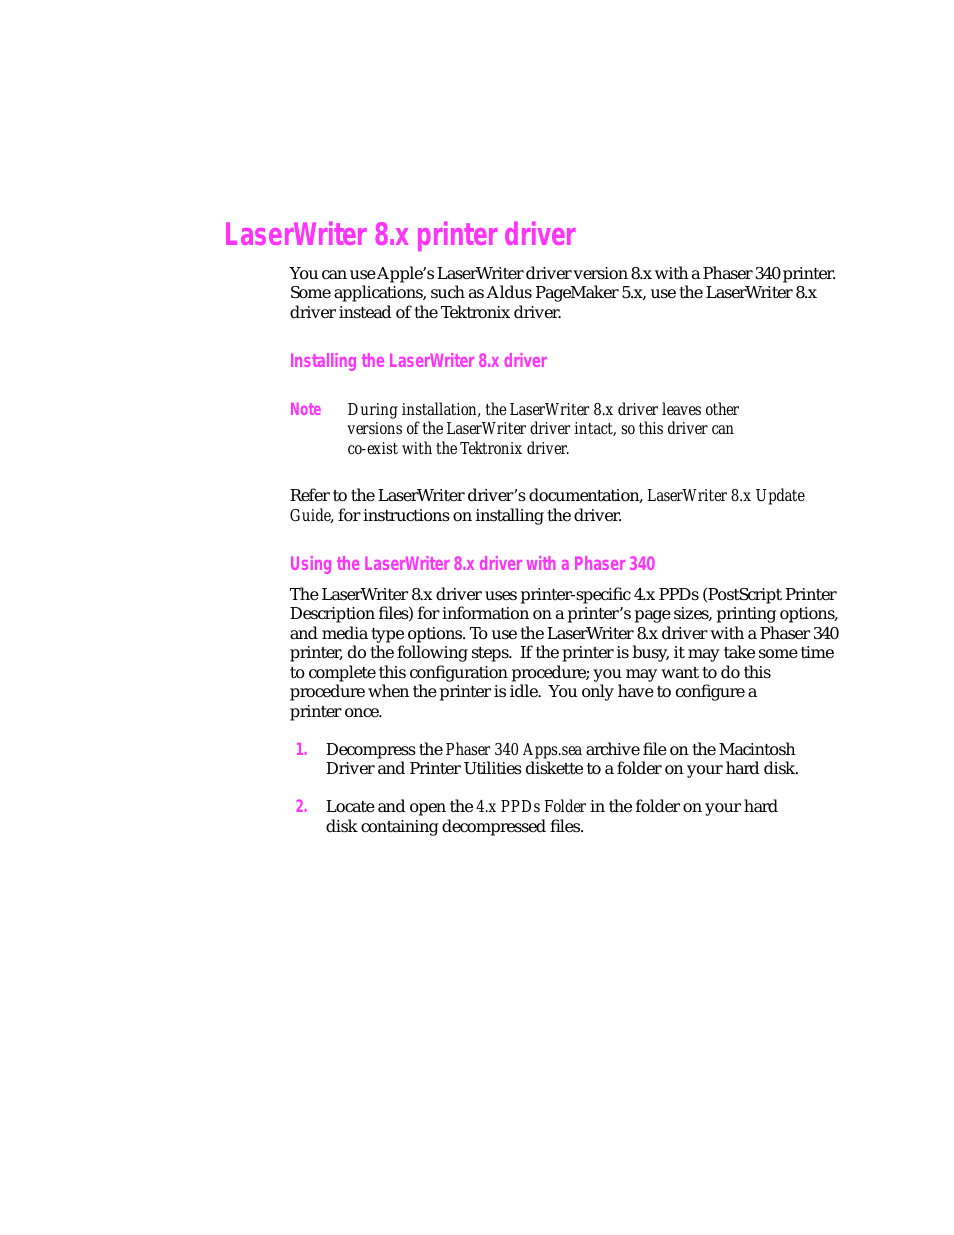 LaserWriter printer driver 8.x